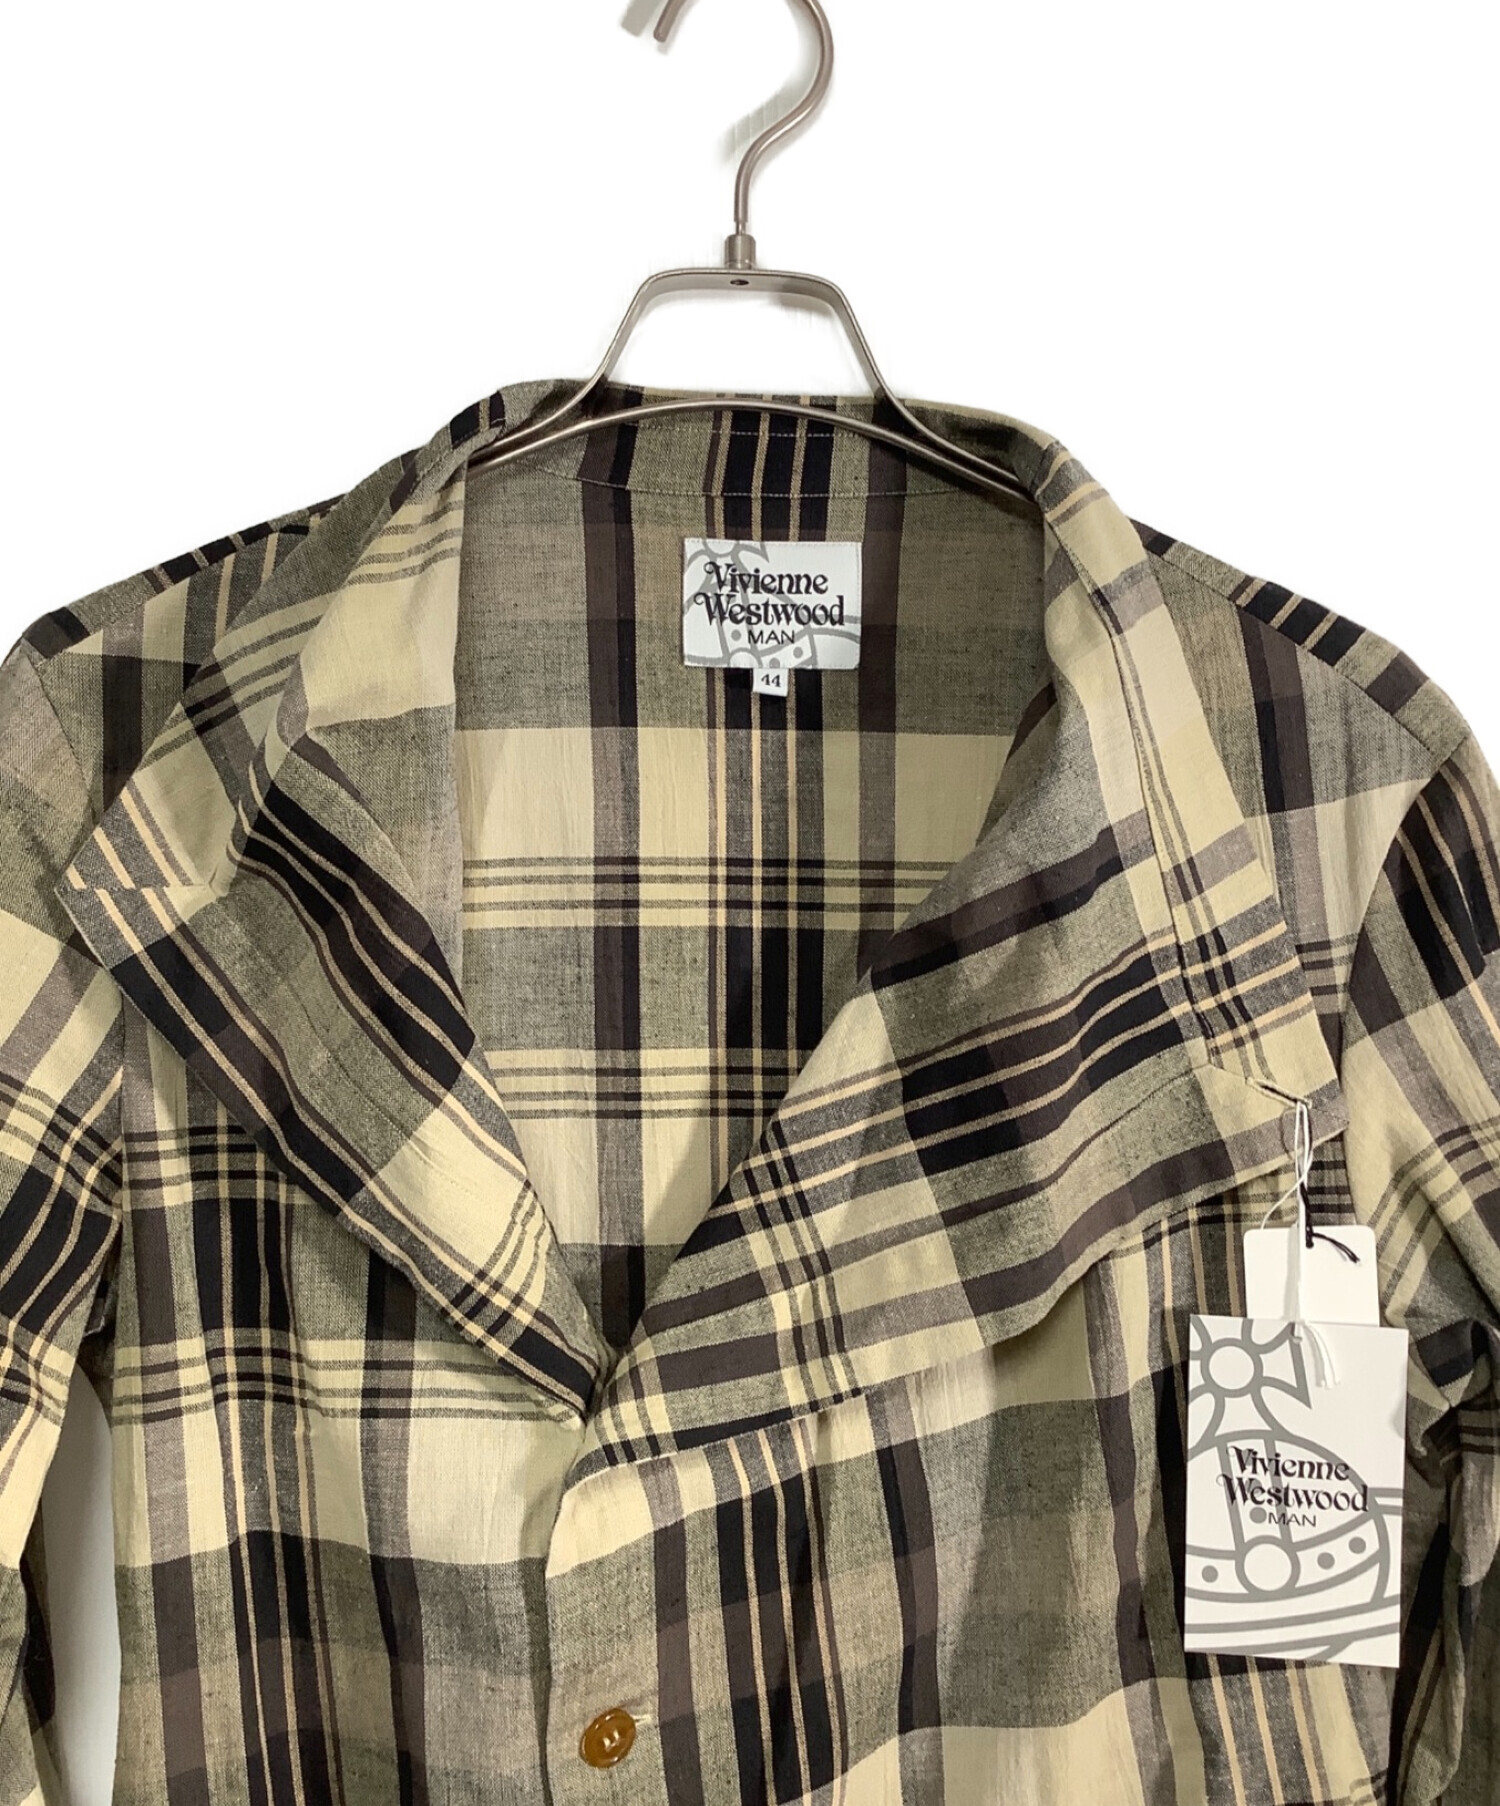 Vivienne Westwood man (ヴィヴィアン ウェストウッド マン) リネン混変形ロングシャツ ベージュ サイズ:44 未使用品